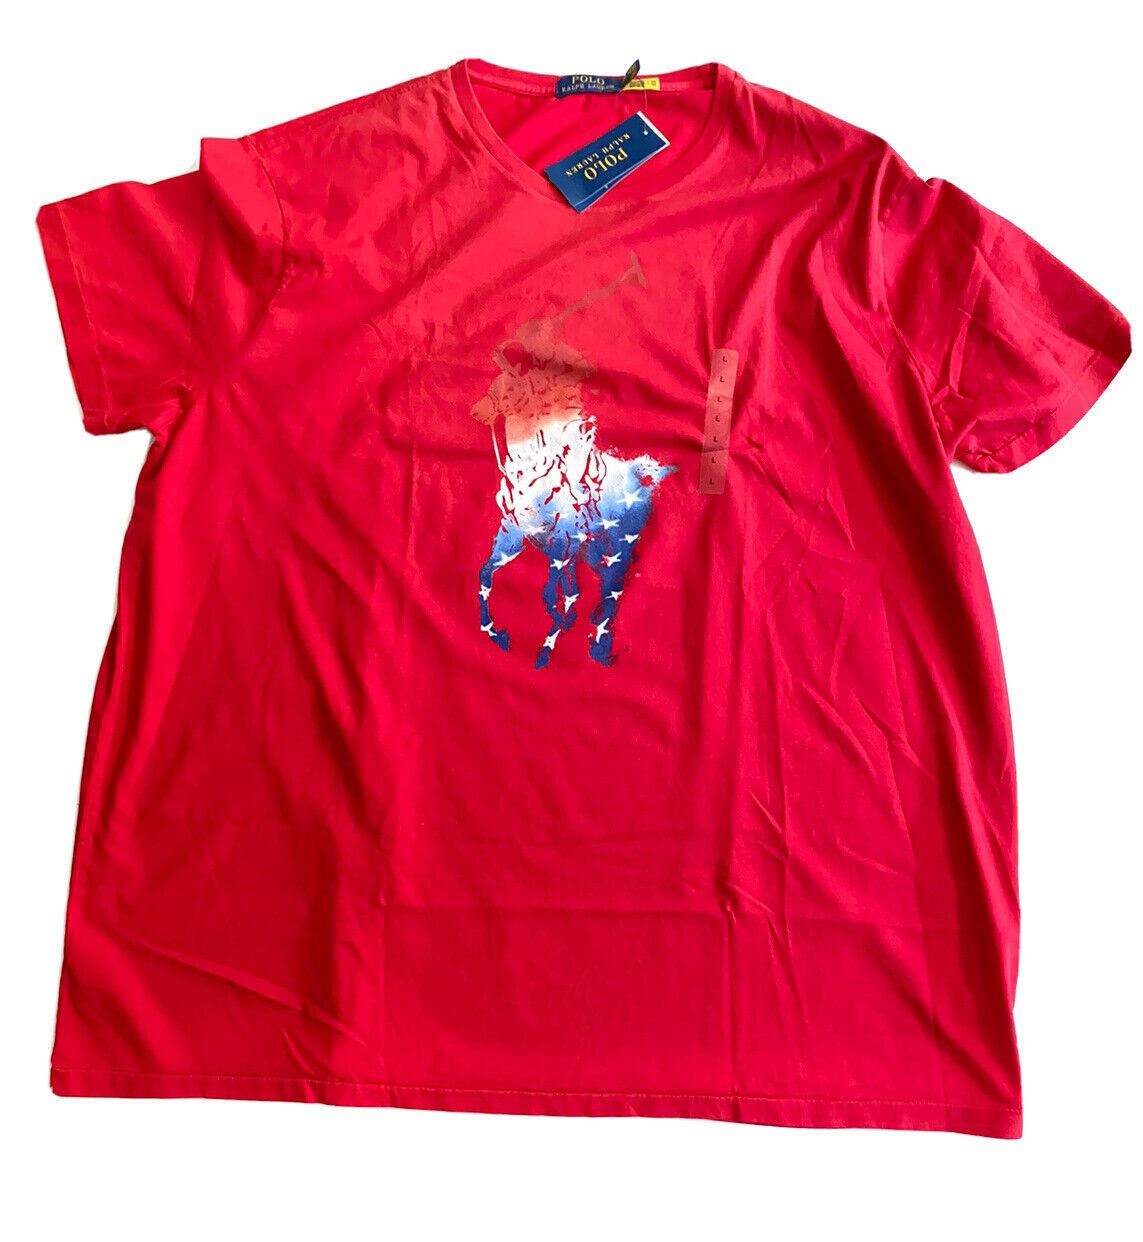 Neu mit Etikett: Polo Ralph Lauren Kurzarm-T-Shirt mit Signature-Logo, Rot, 2XL 